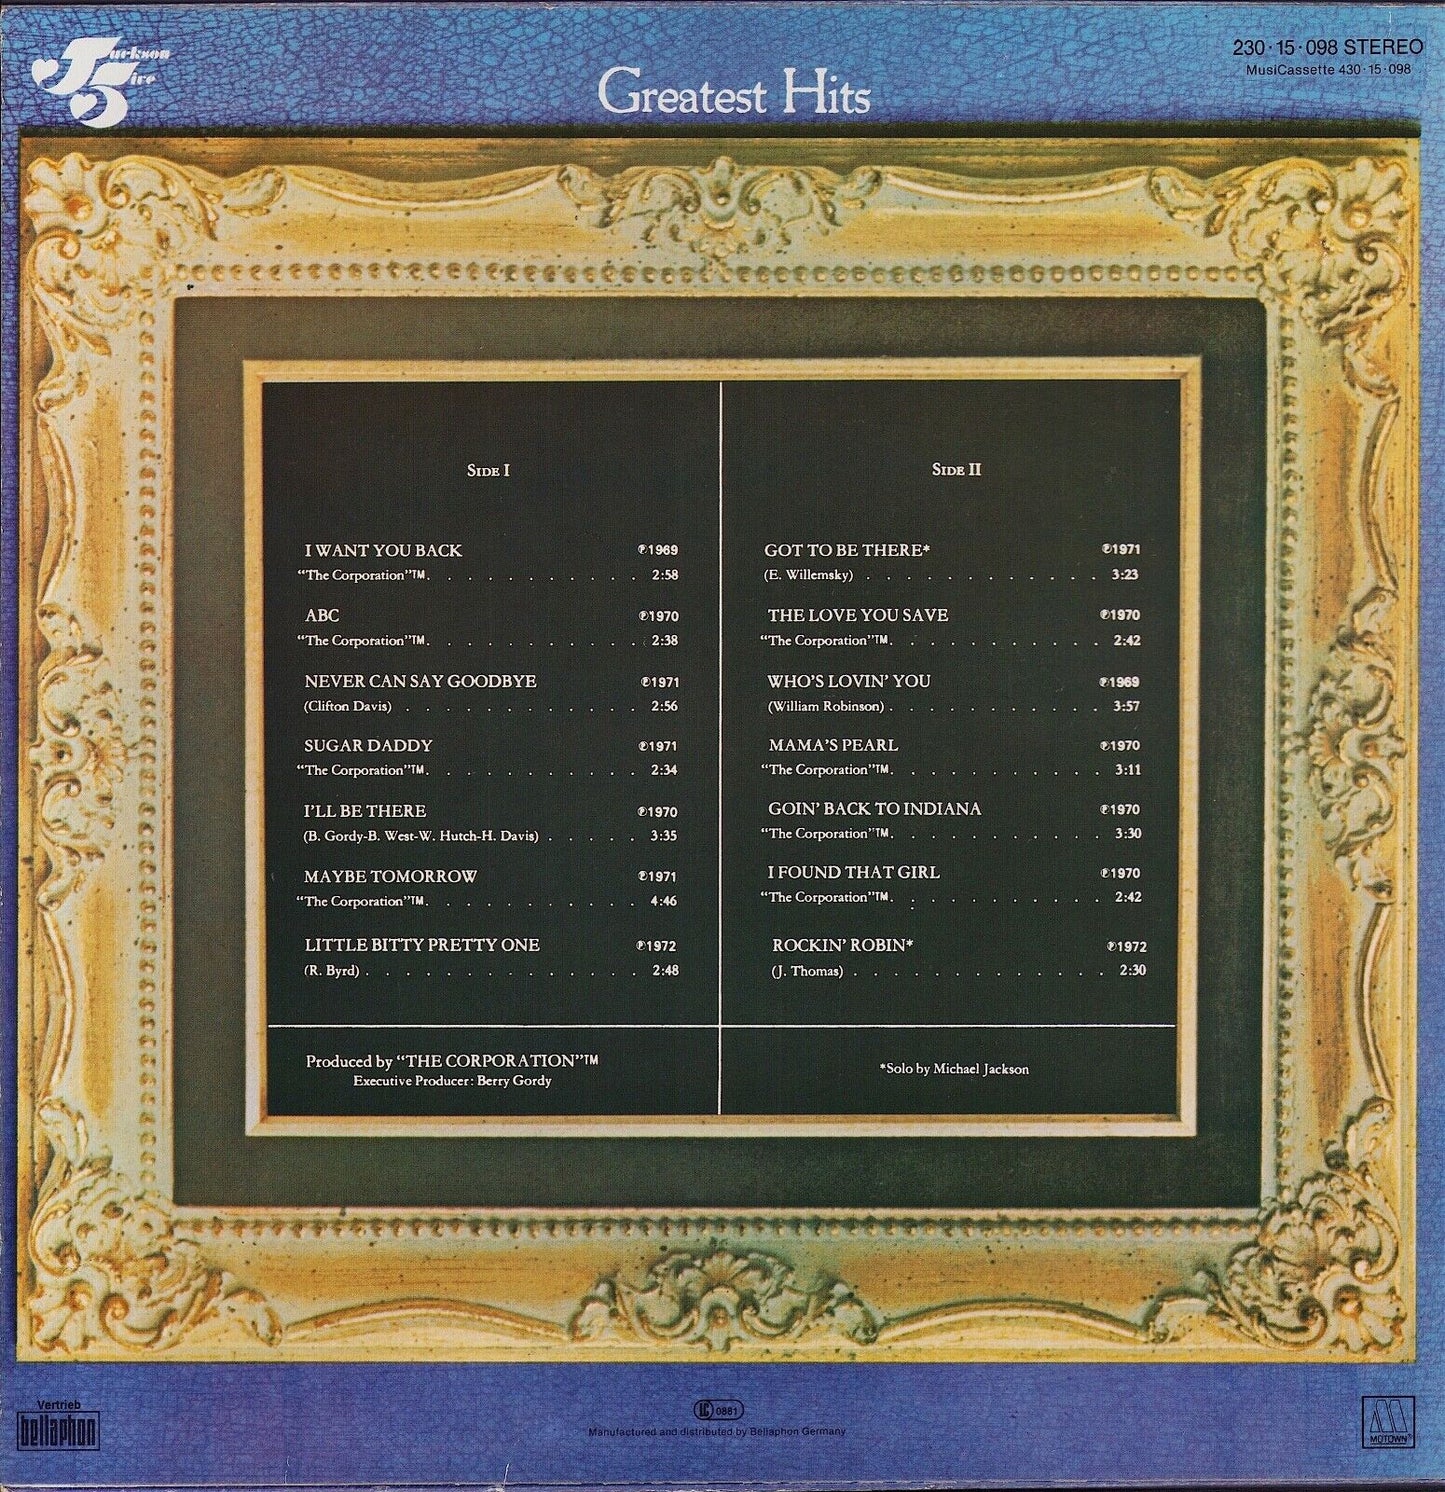 The Jackson Five - The Jackson Five Greatest Hits Vinyl LP